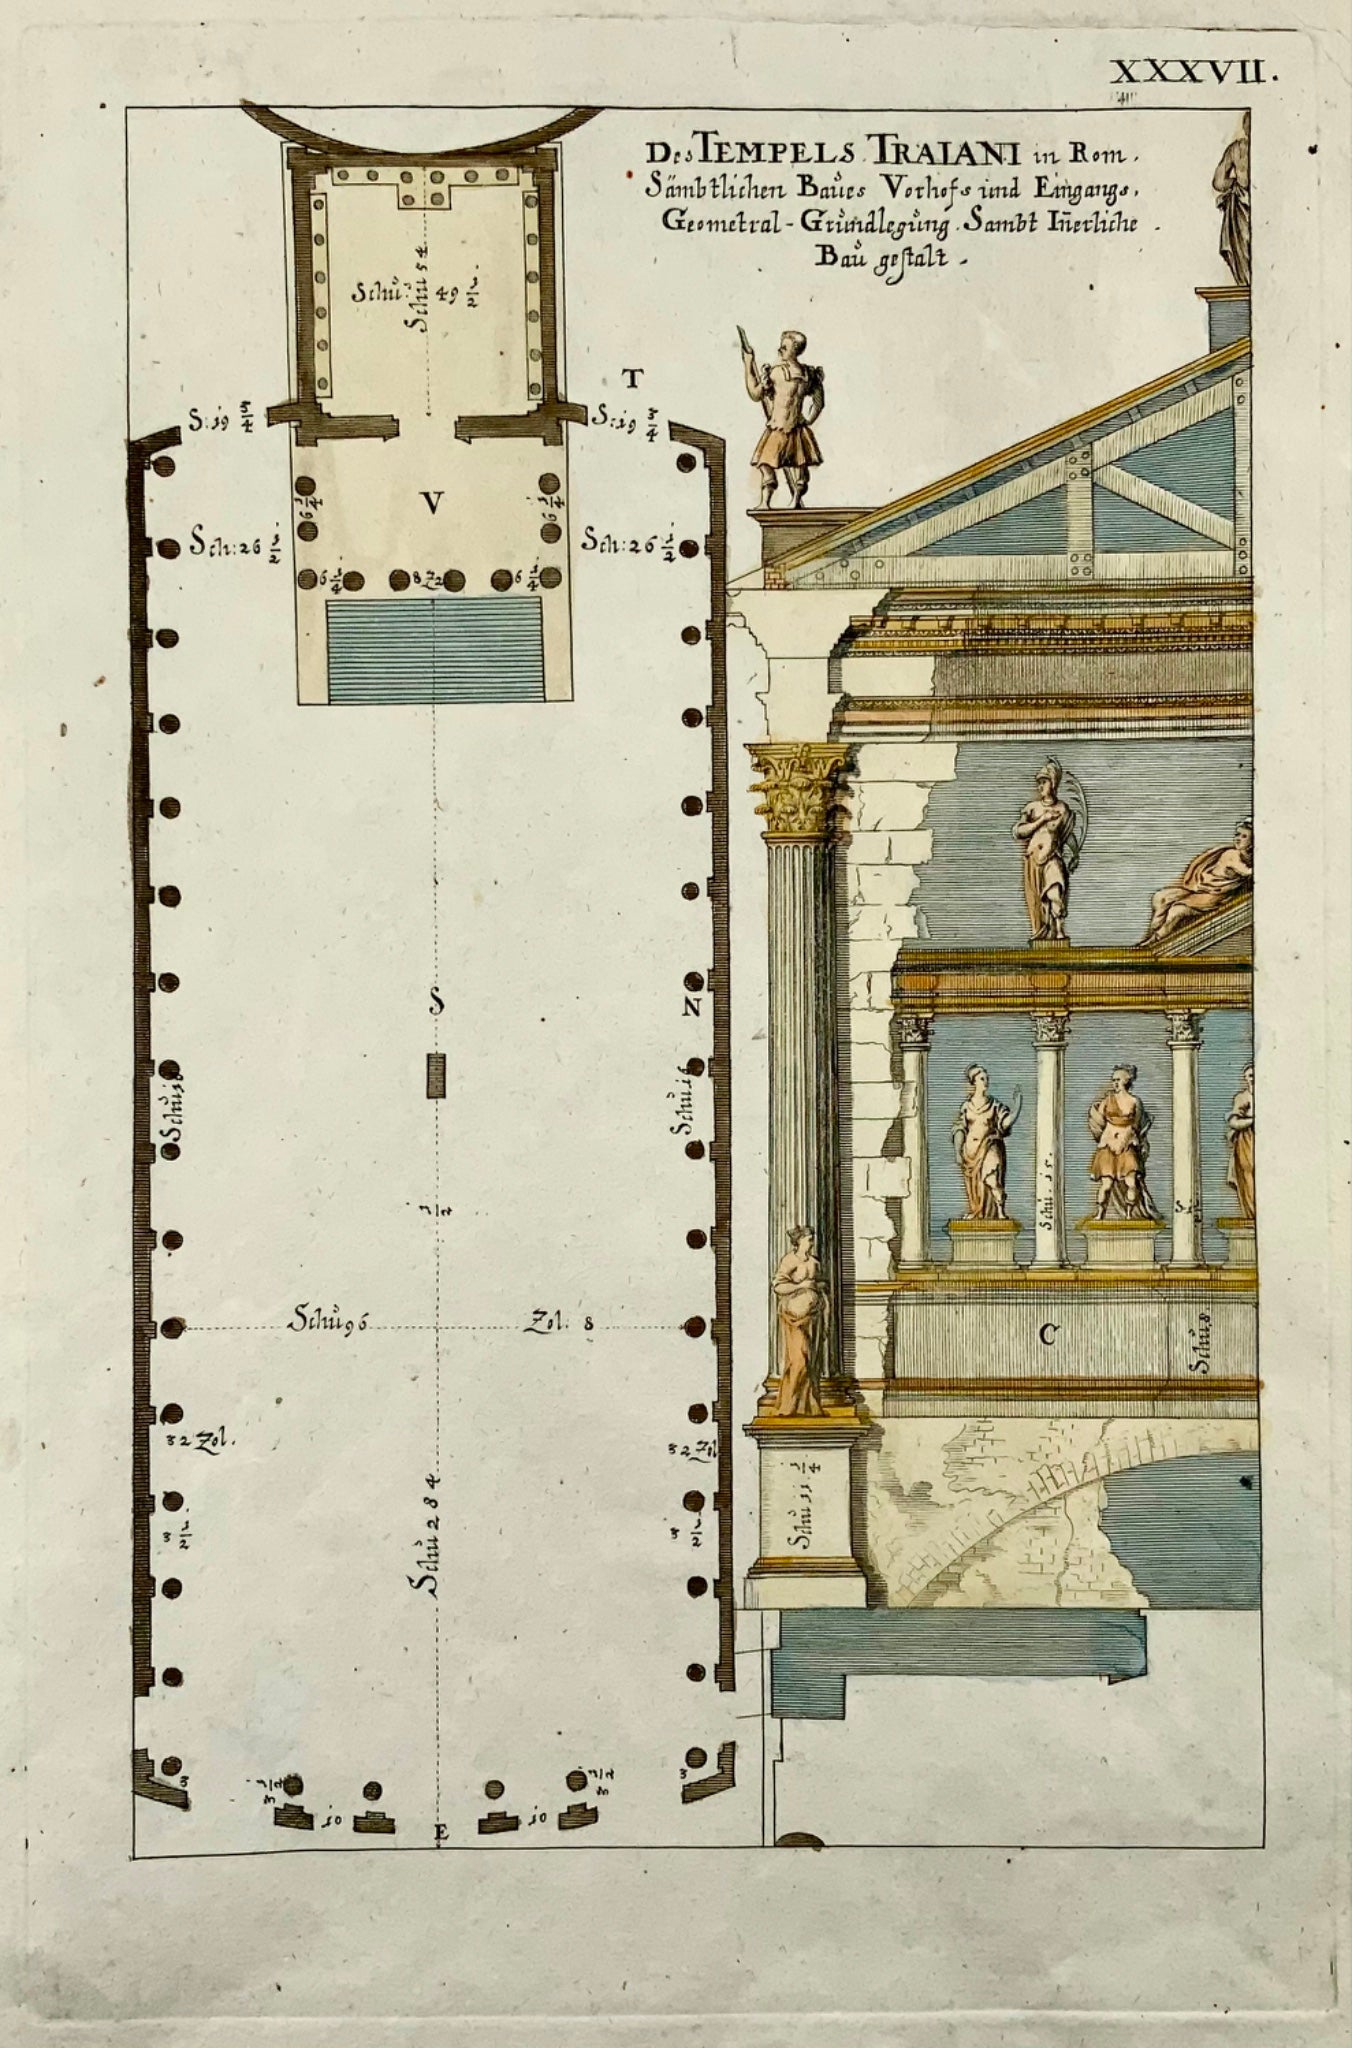 1679 Trajan’s Temple in Rome, Joh. Sandrart, master engraving